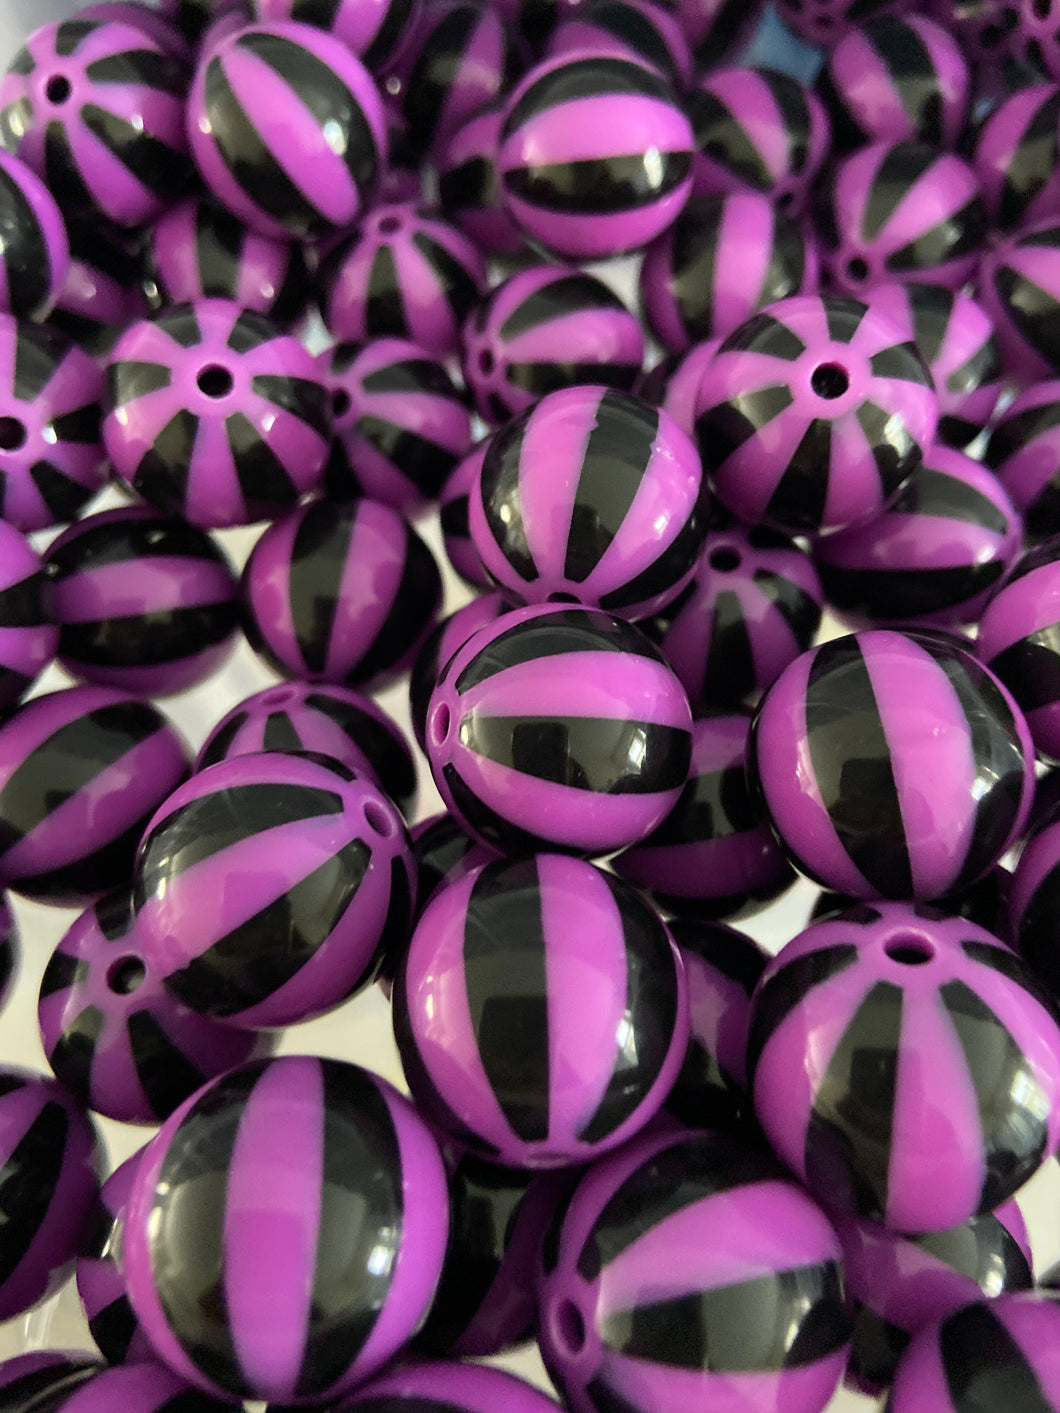 Acrylic Beads - Clear 8mm - Purple Taco